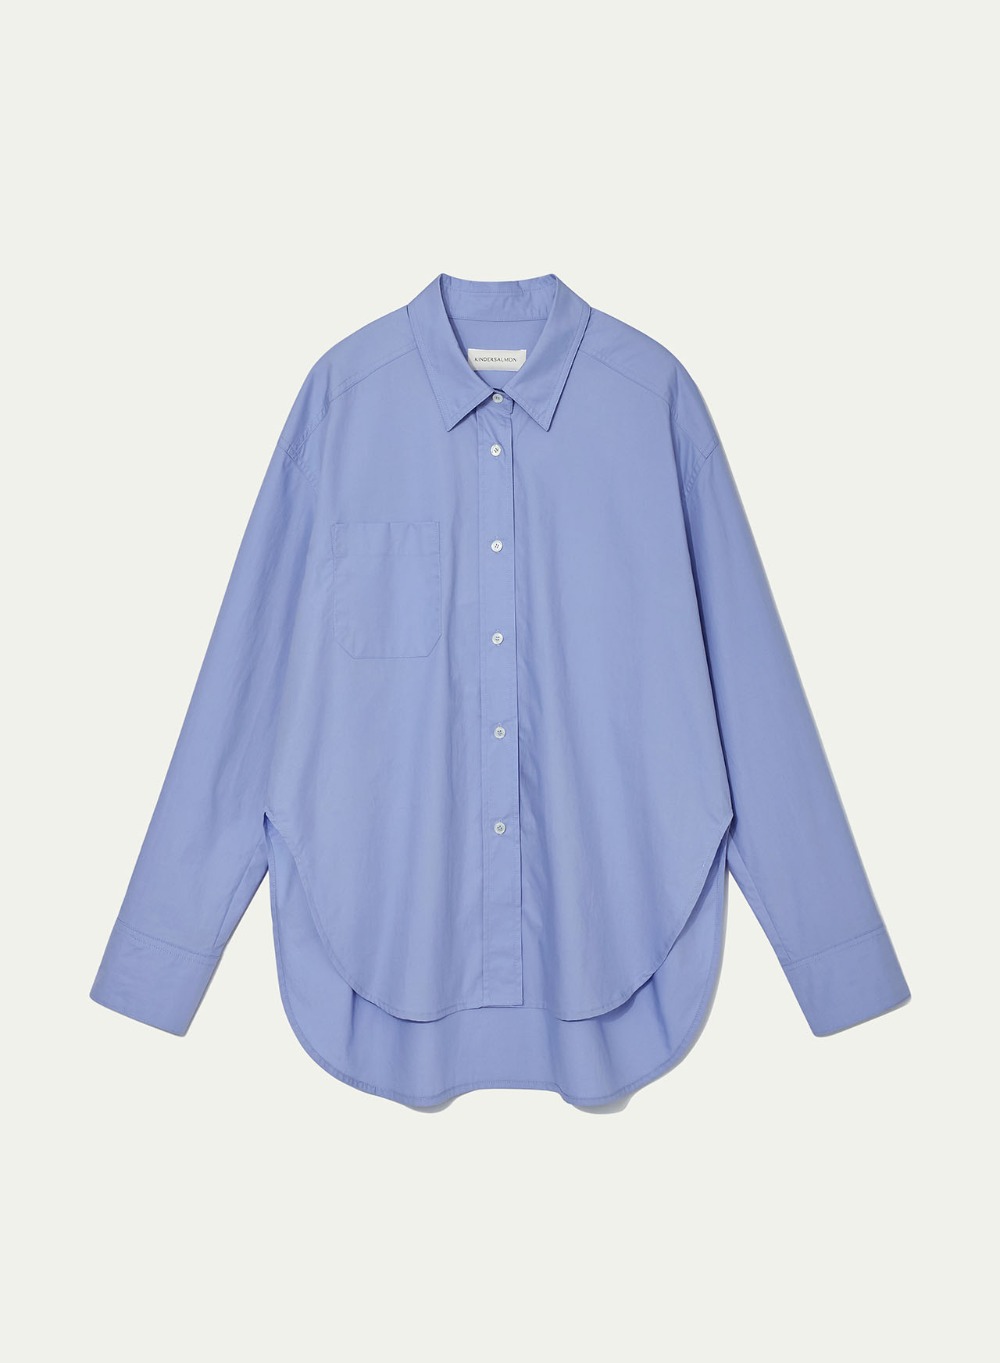 FW23 노라Nora Classic Shirt Capri Blue